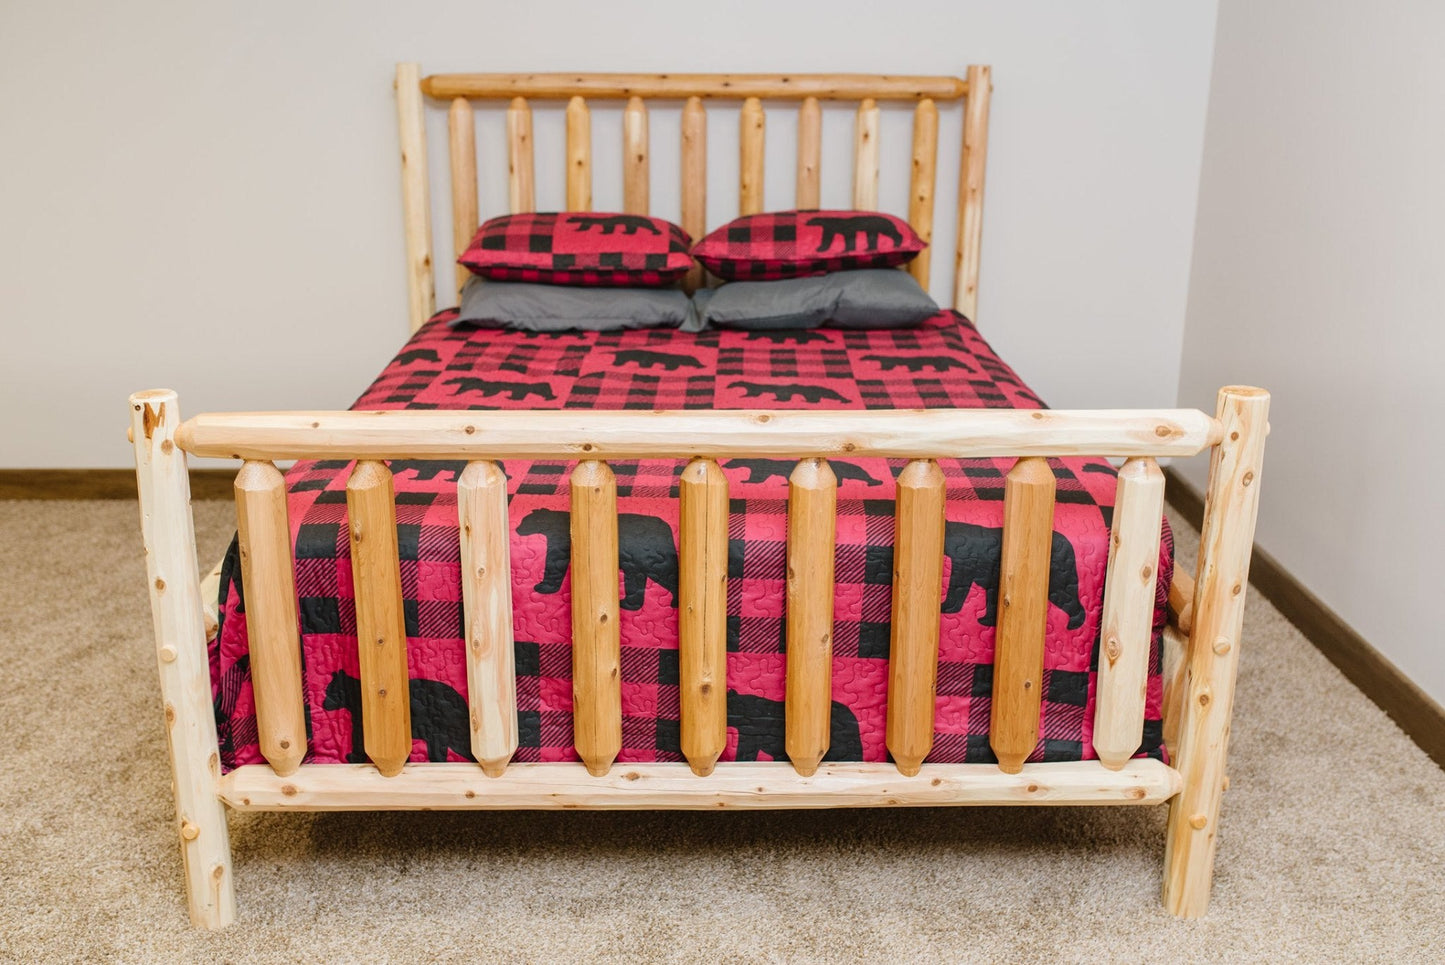 Cedar Log Bed